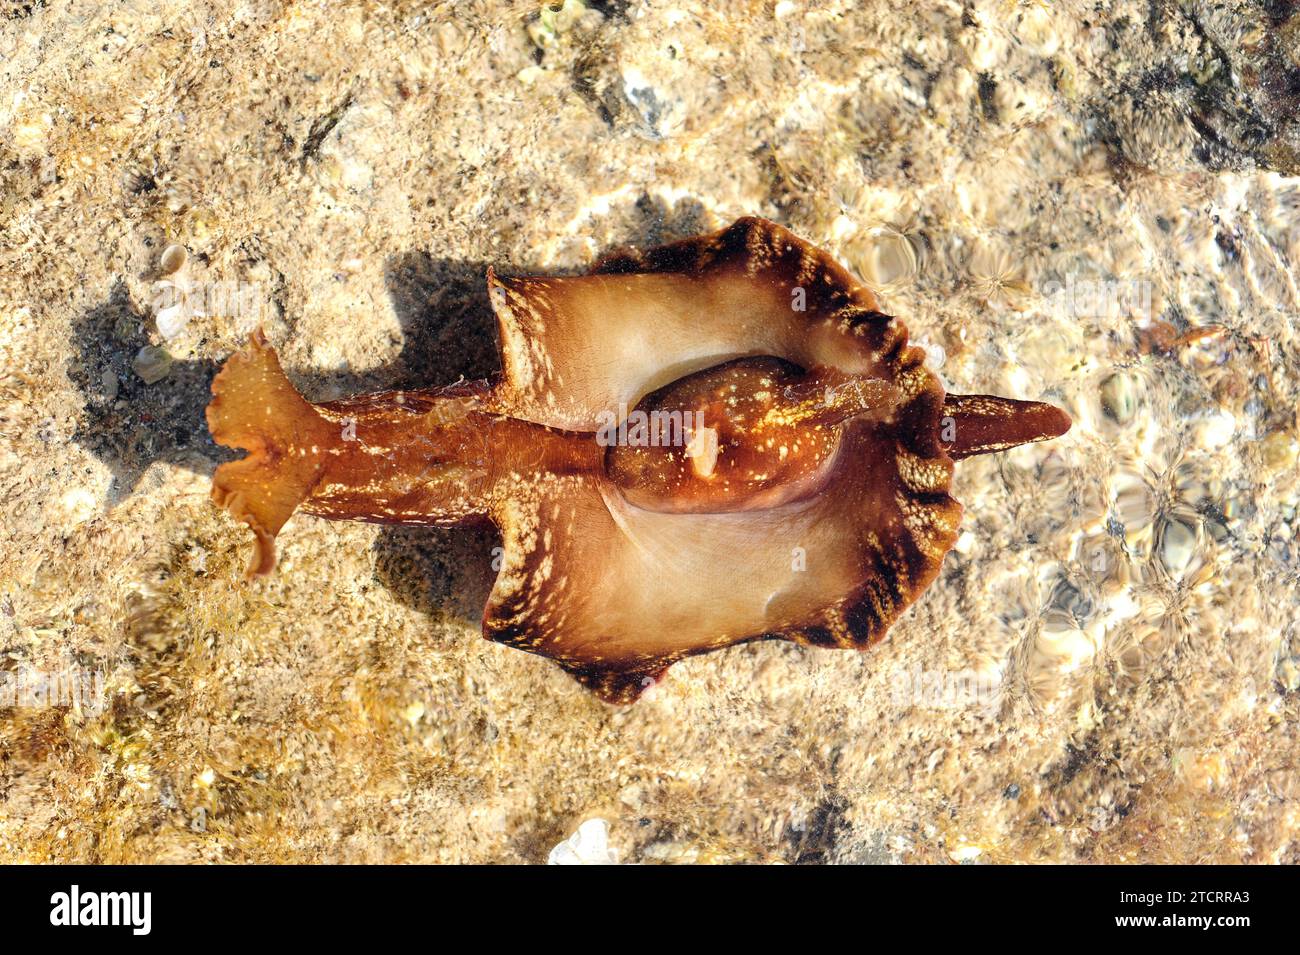 Sea slug or sea hare (Aplysia punctata) is a marine mollusk. This photo was taken in Cap Ras, Girona province, Catalonia, Spain. Stock Photo